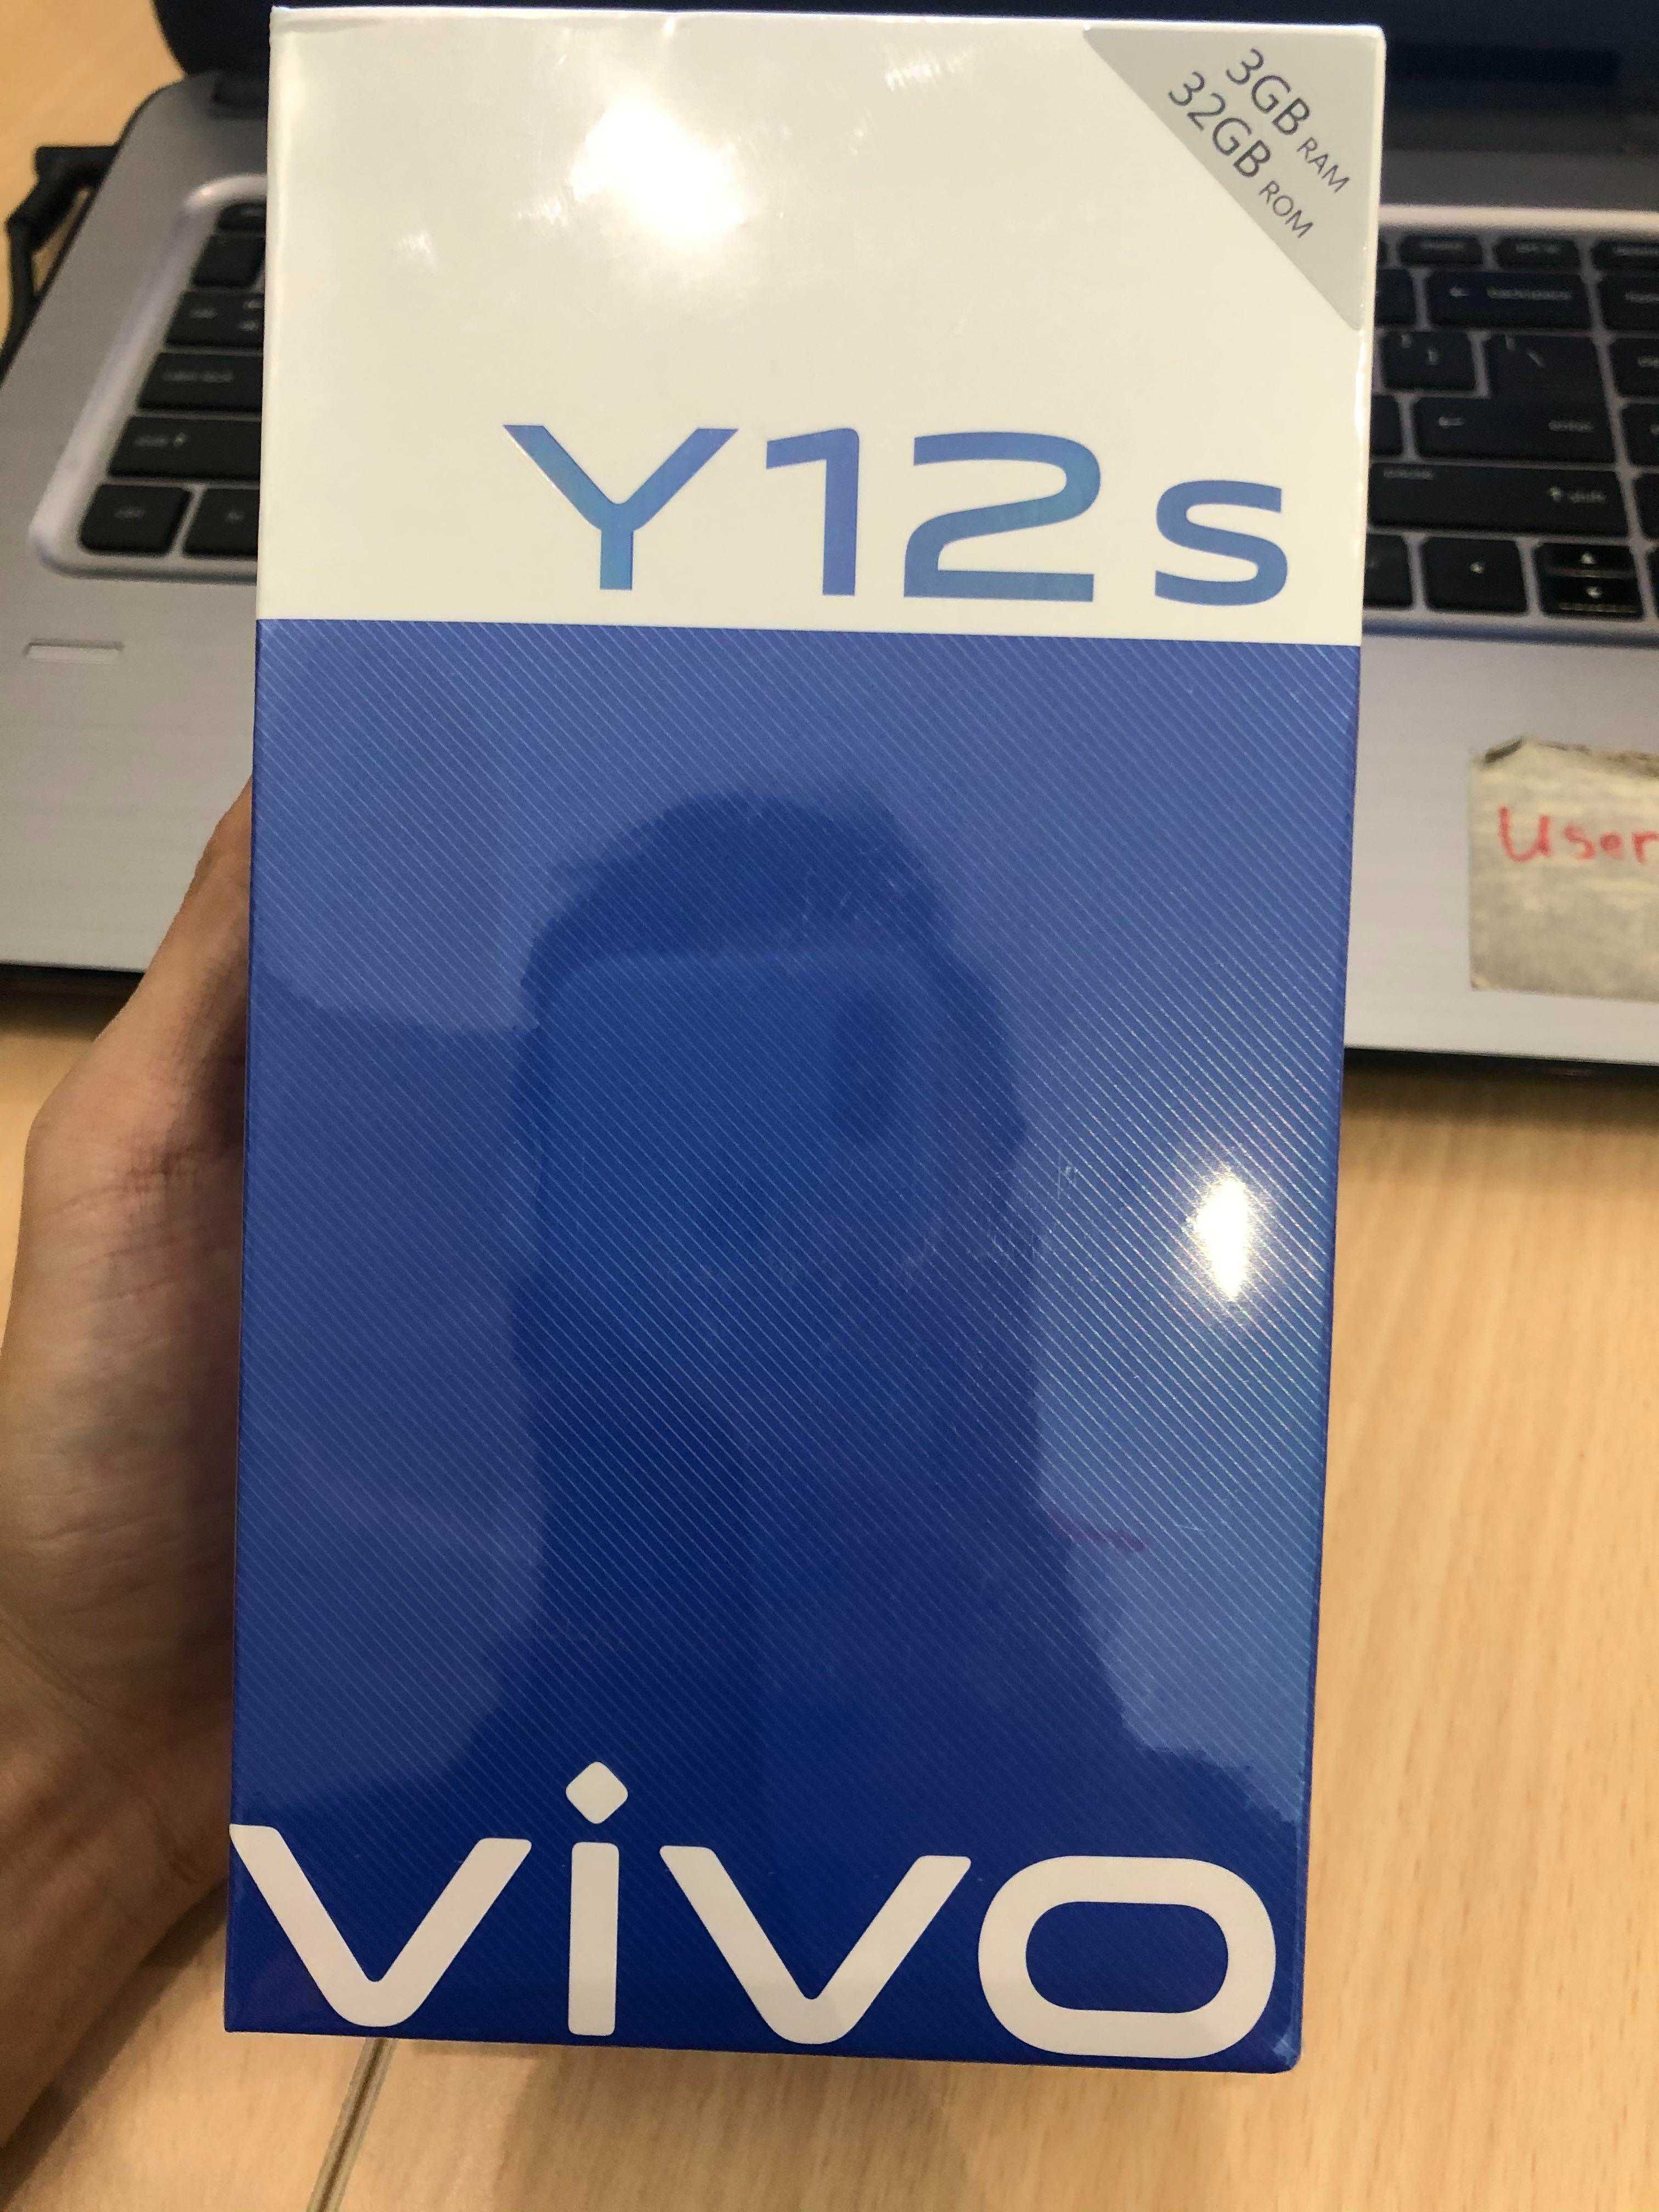 Продаётся новый Vivo Y12s